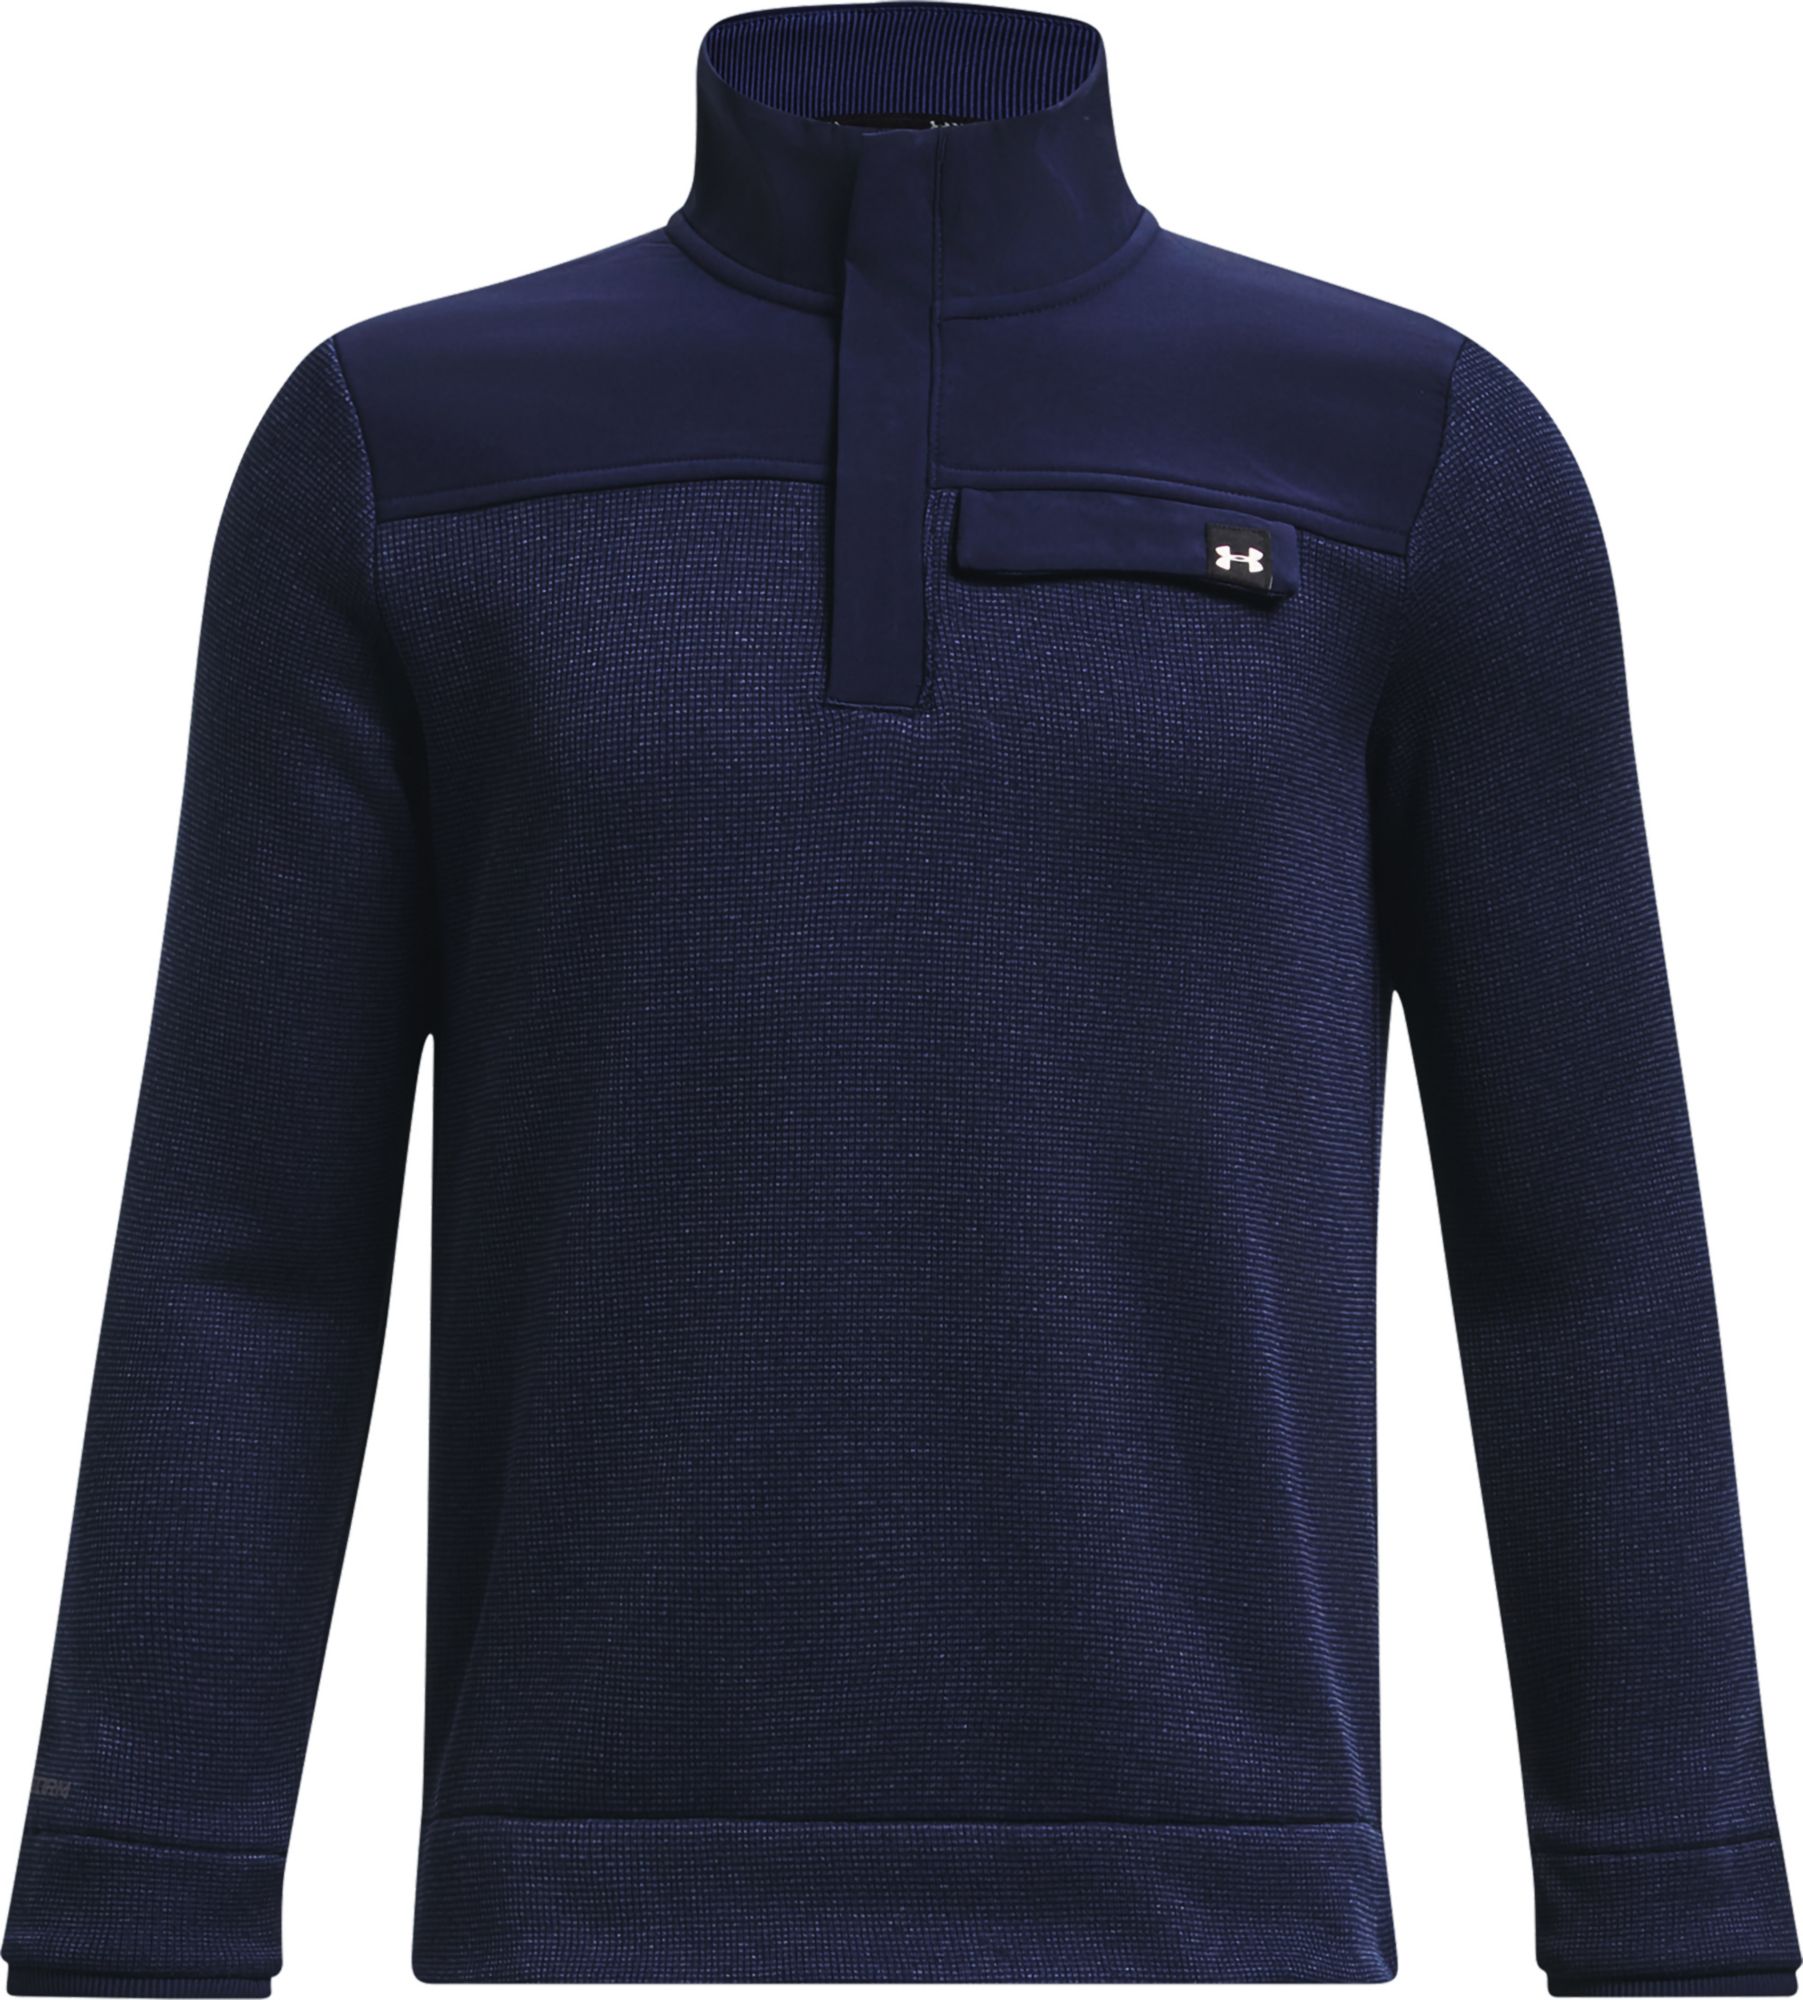 Under Armour Boys' SweaterFleece Half-Zip Pullover